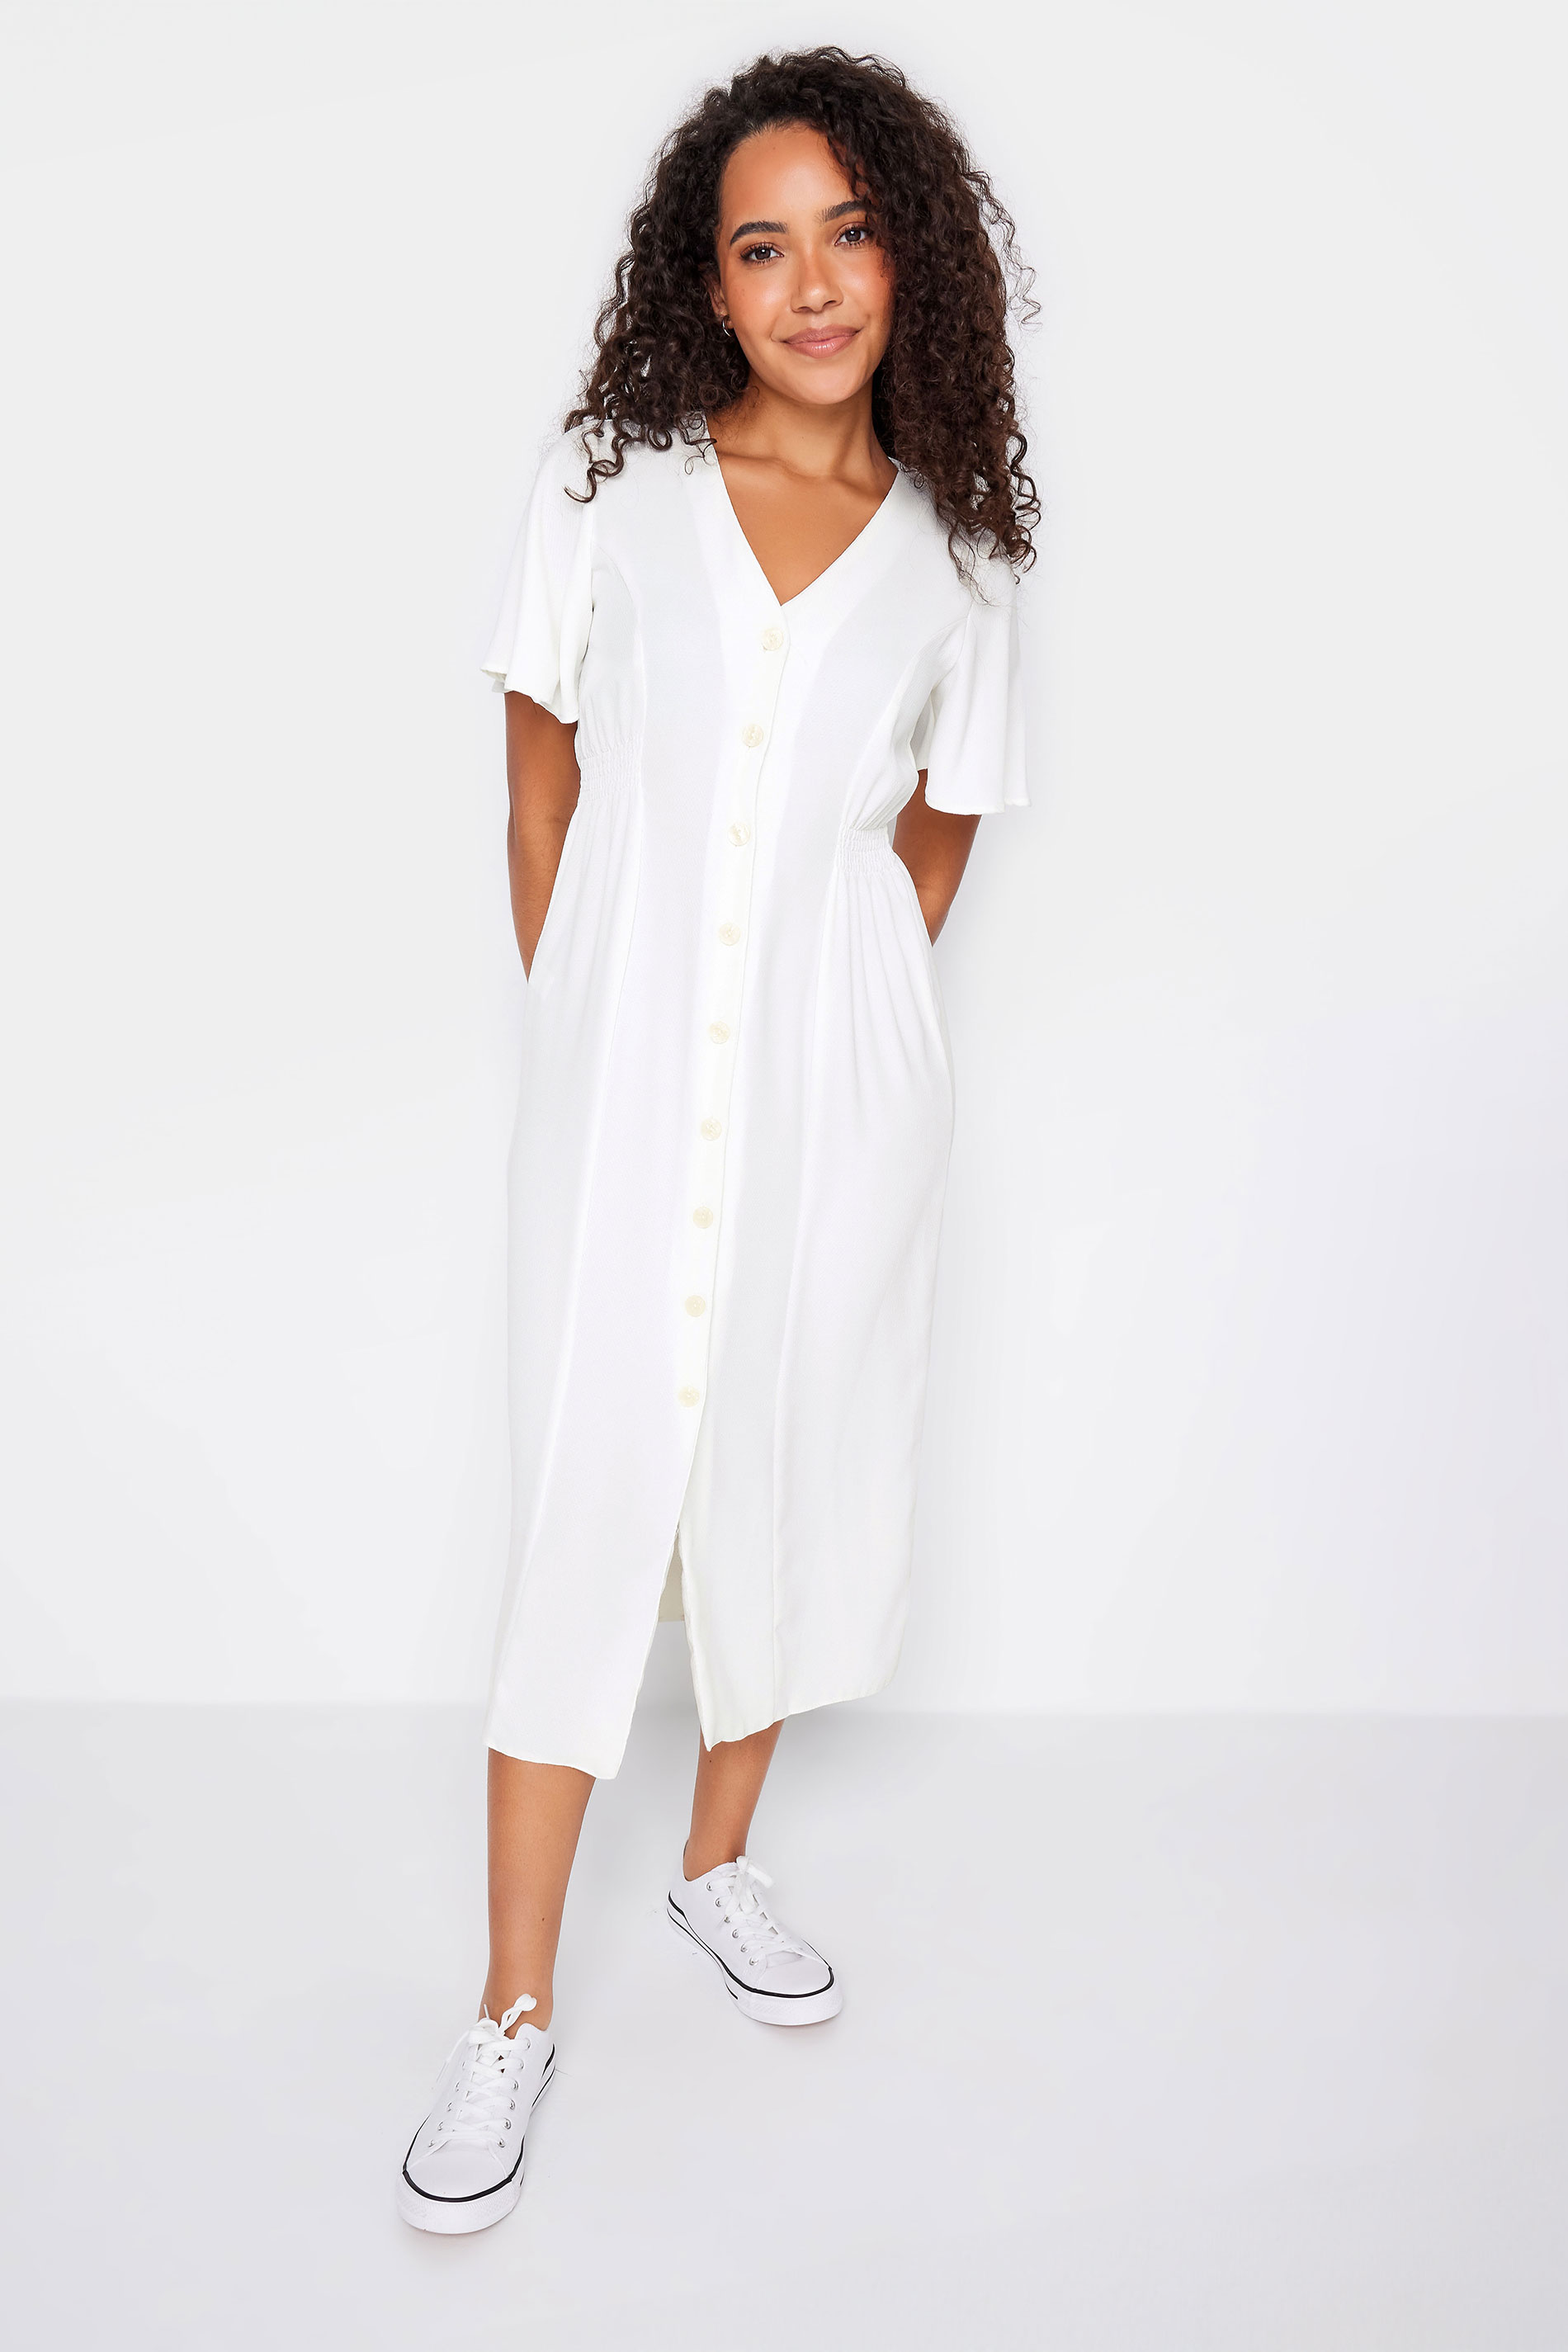 M&Co White Shirred Waist Button Dress | M&Co 1